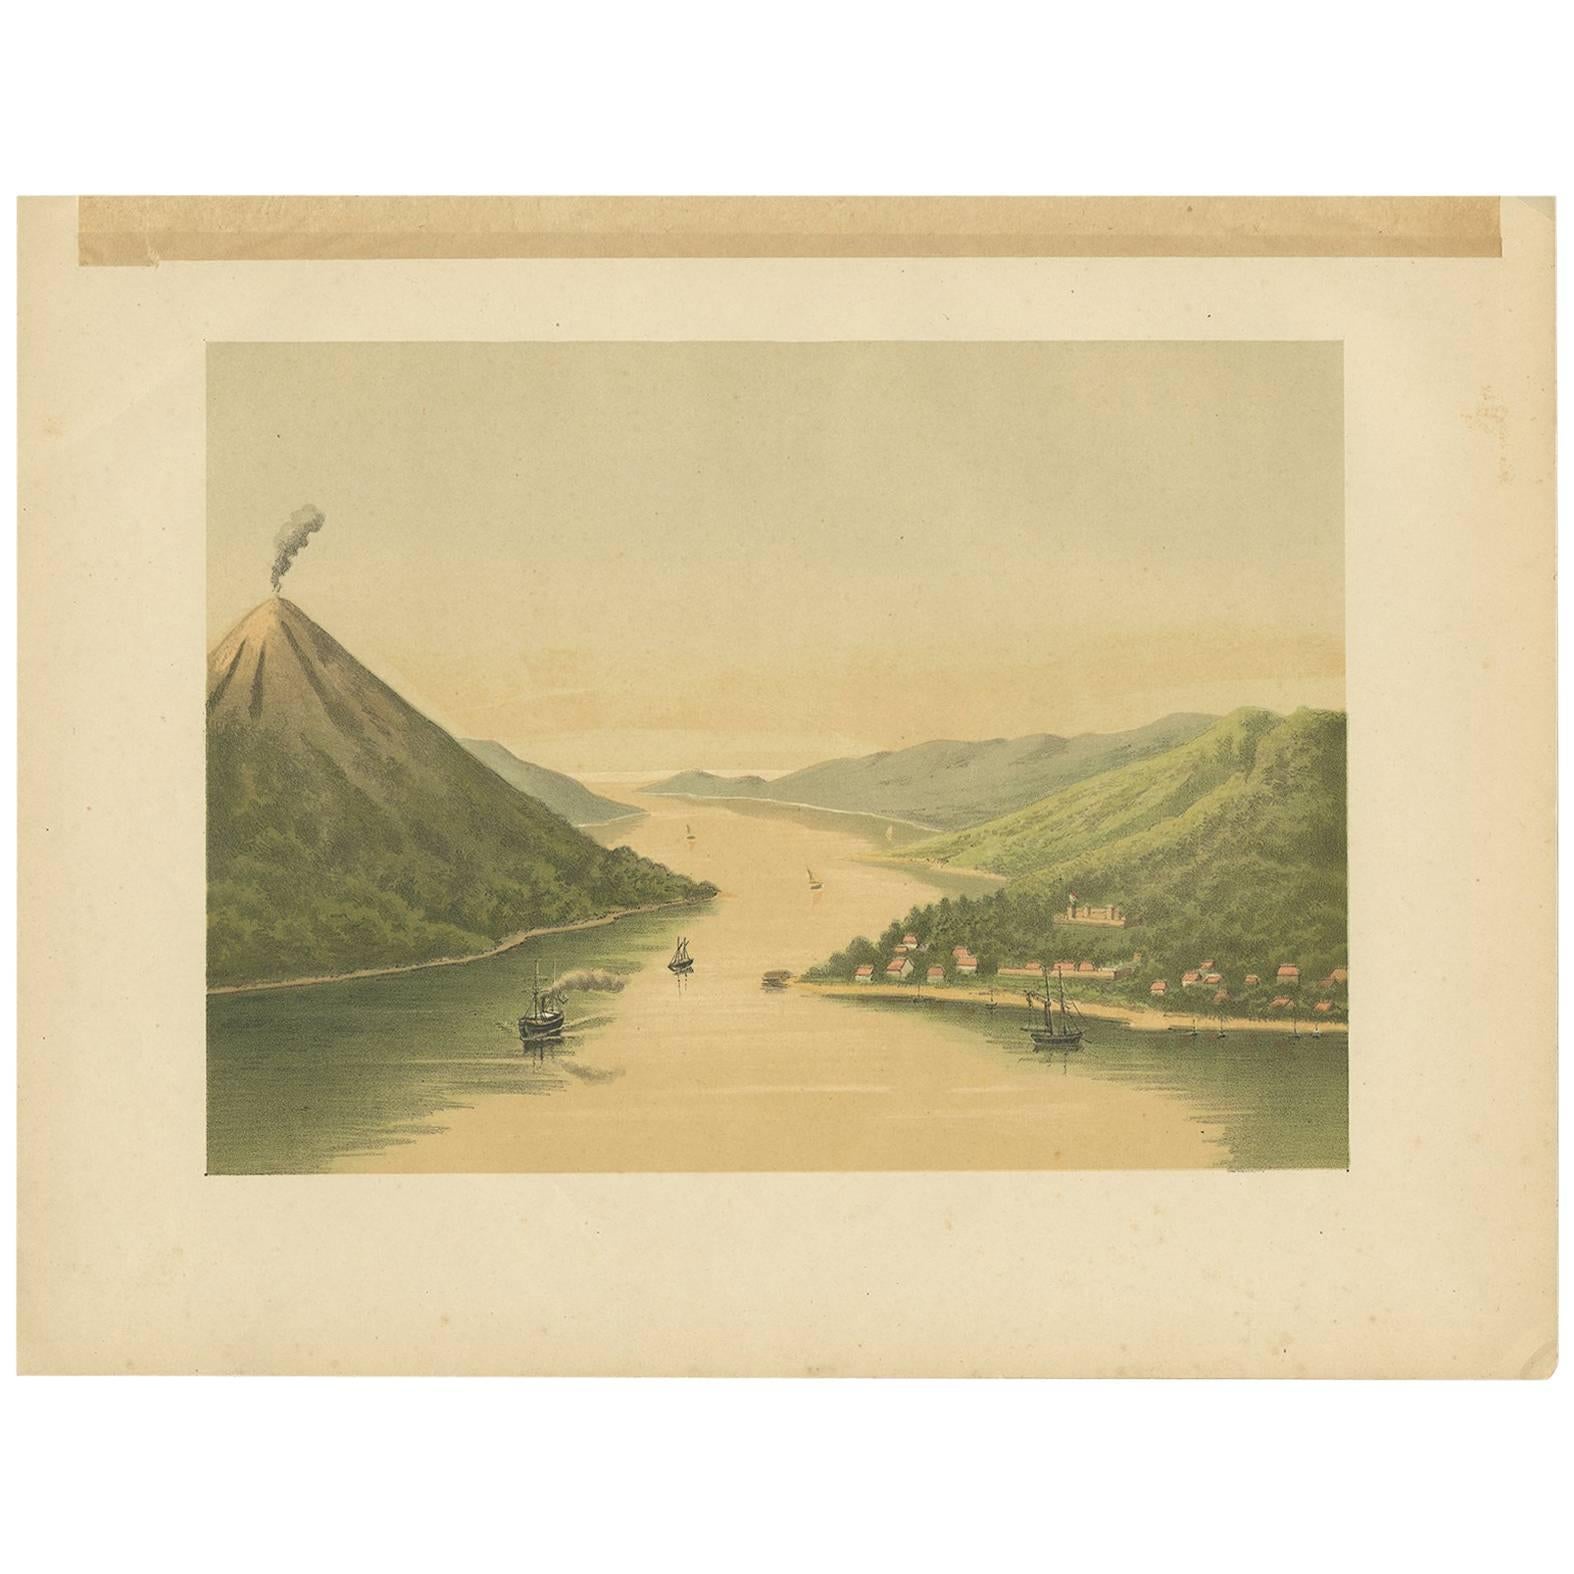 Antique Print of the Volcano Gunung Api in Indonesia, 1888